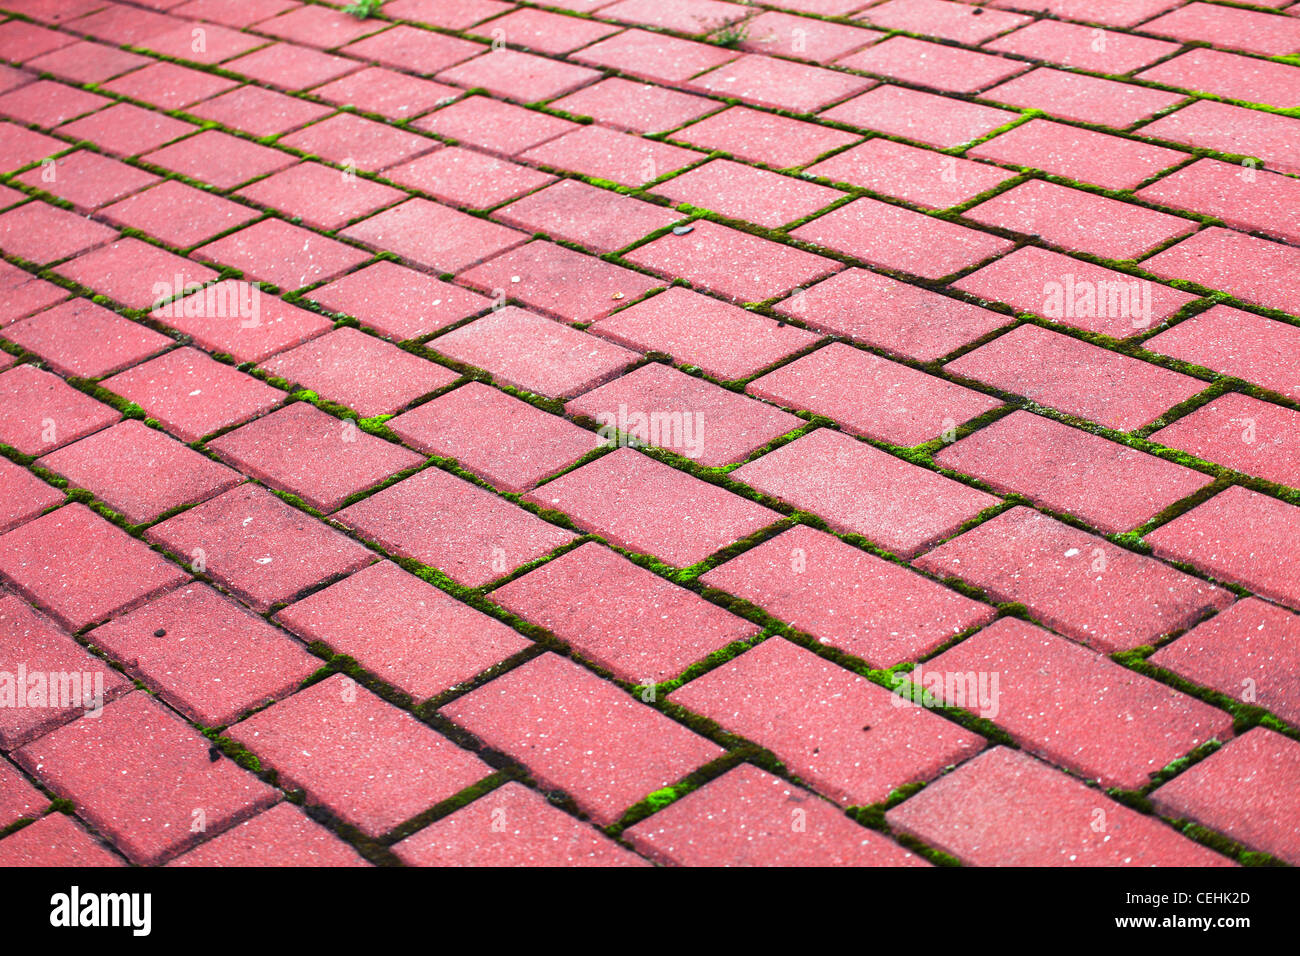 Garden stone path Brick Sidewalk paving tiles Stock Photo